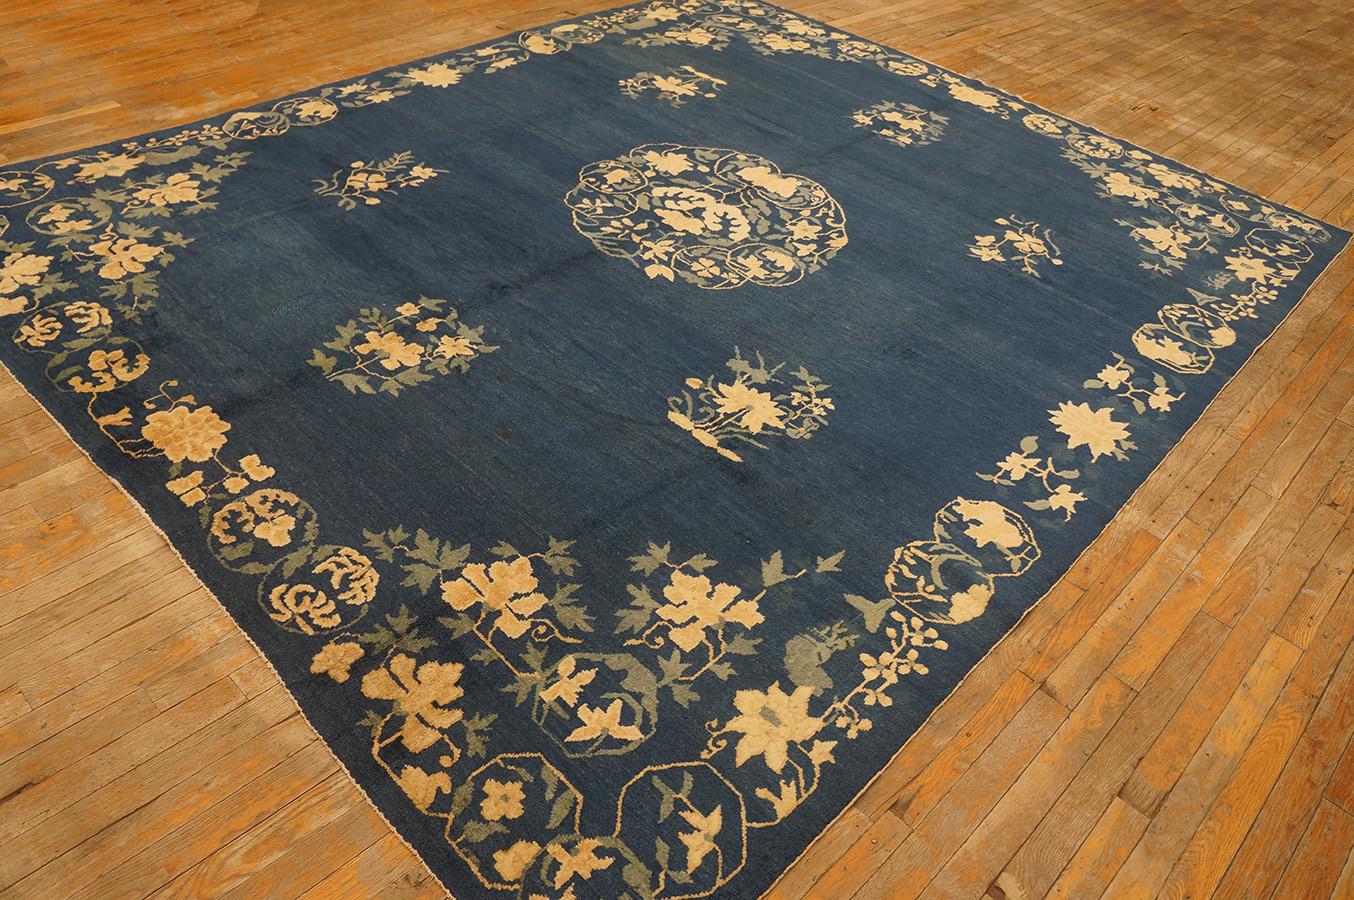 Antique Chinese Peking rug. Measures 8' 0''x 9' 6''.